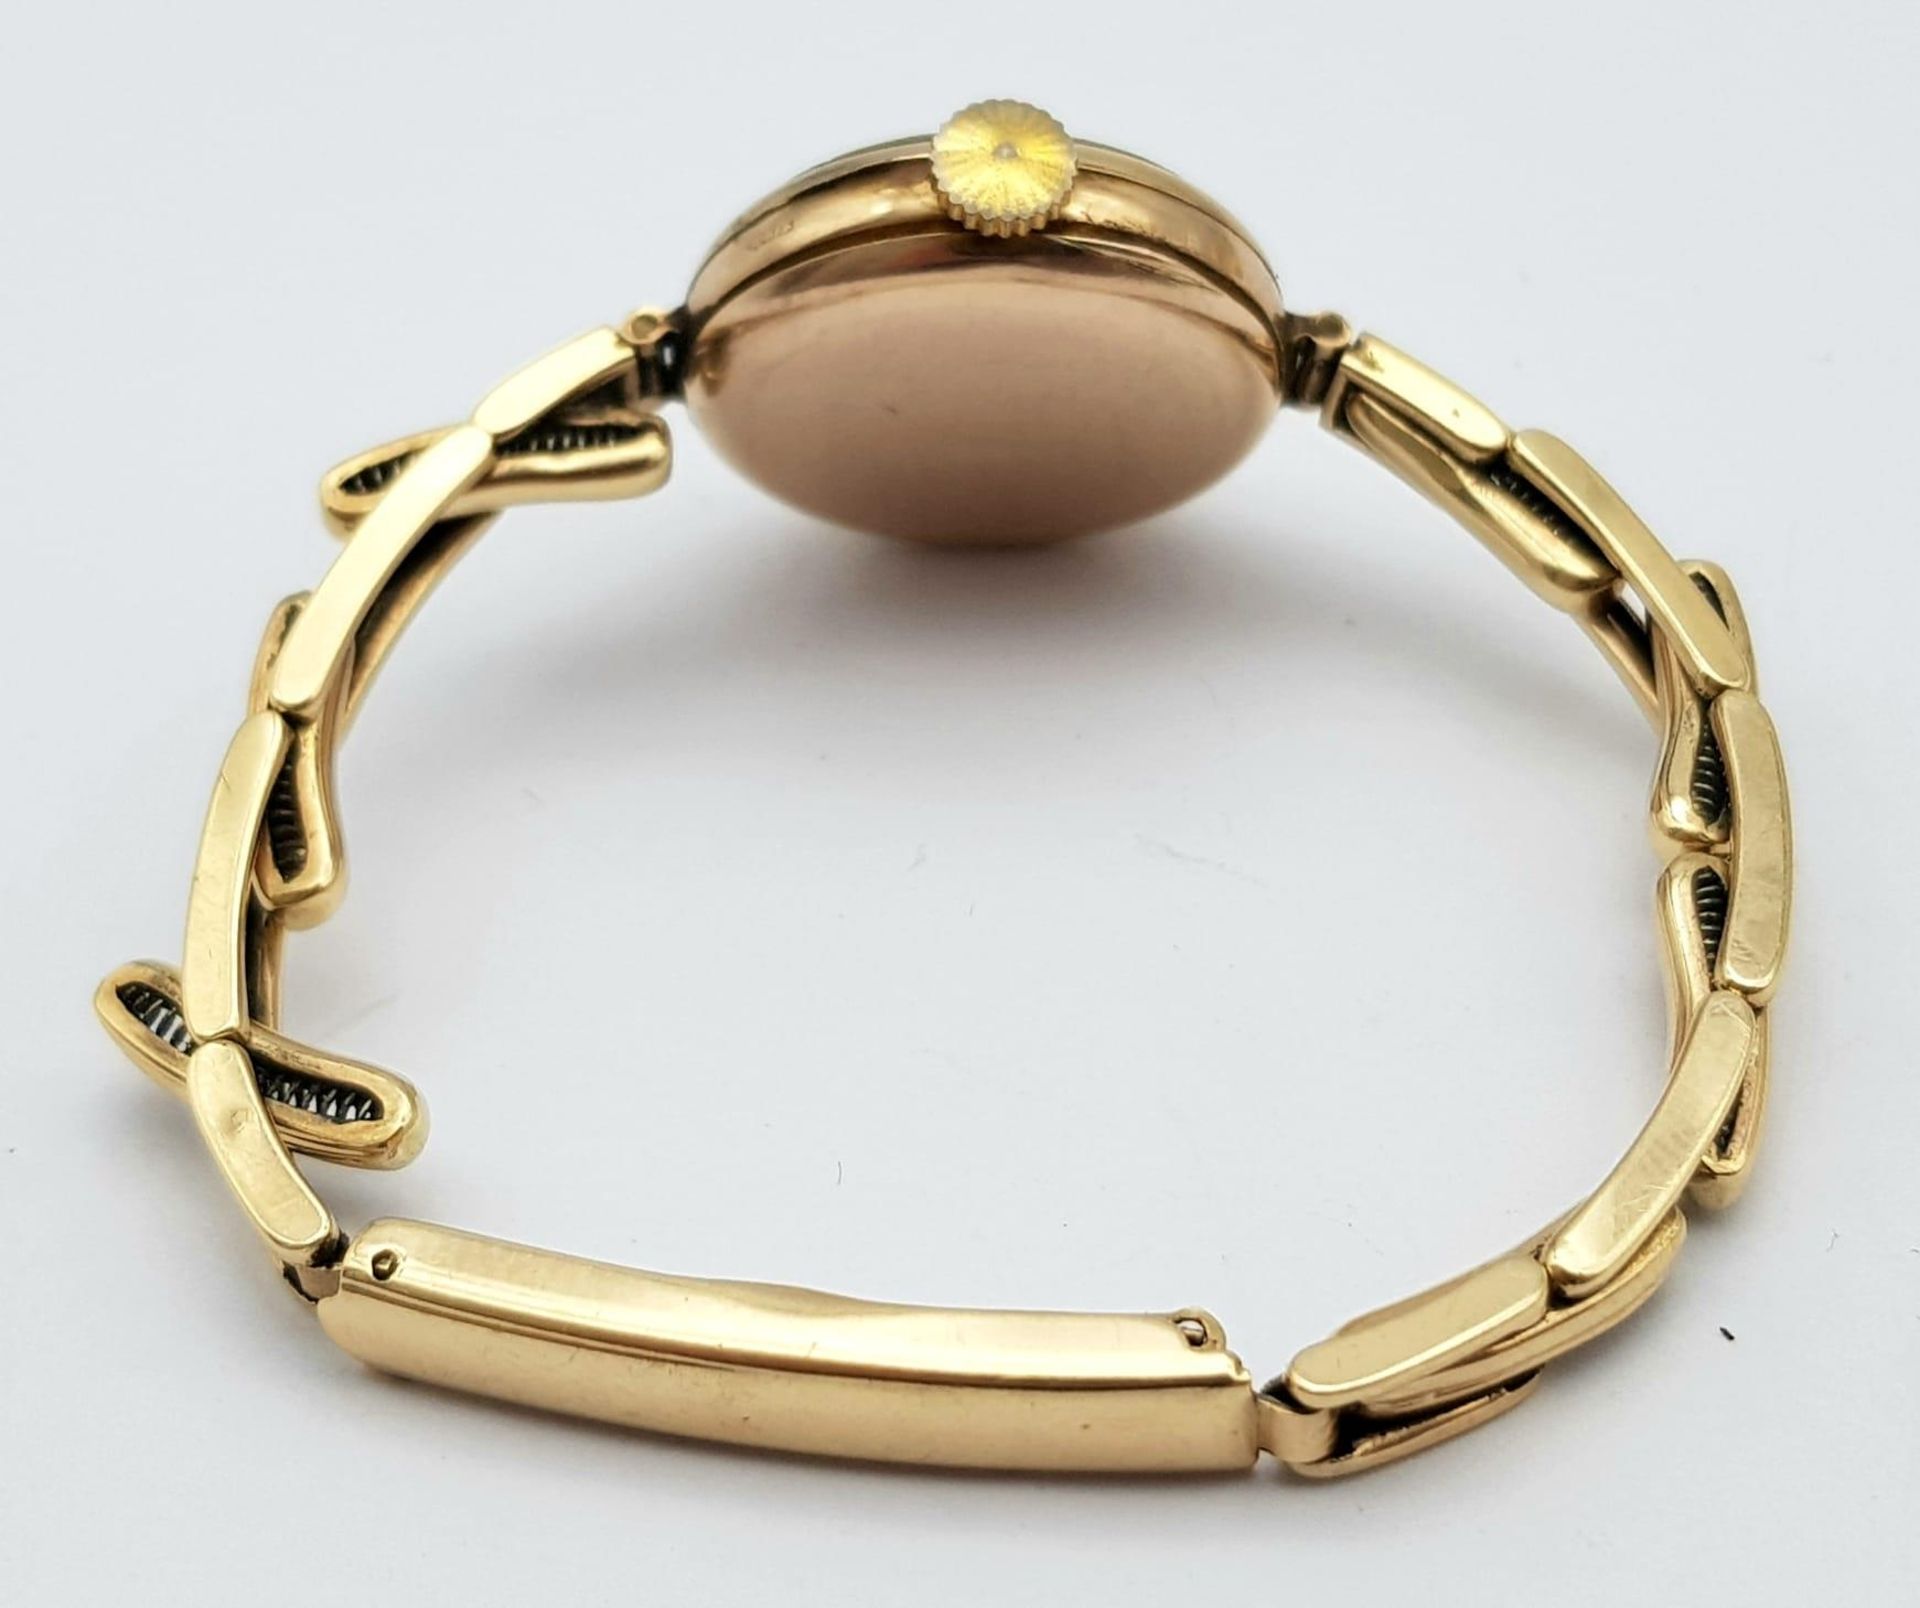 A Vintage 9K Gold Rolex Mechanical Ladies Watch. 9k gold expandable bracelet. 9k gold case - 23mm. - Image 3 of 6